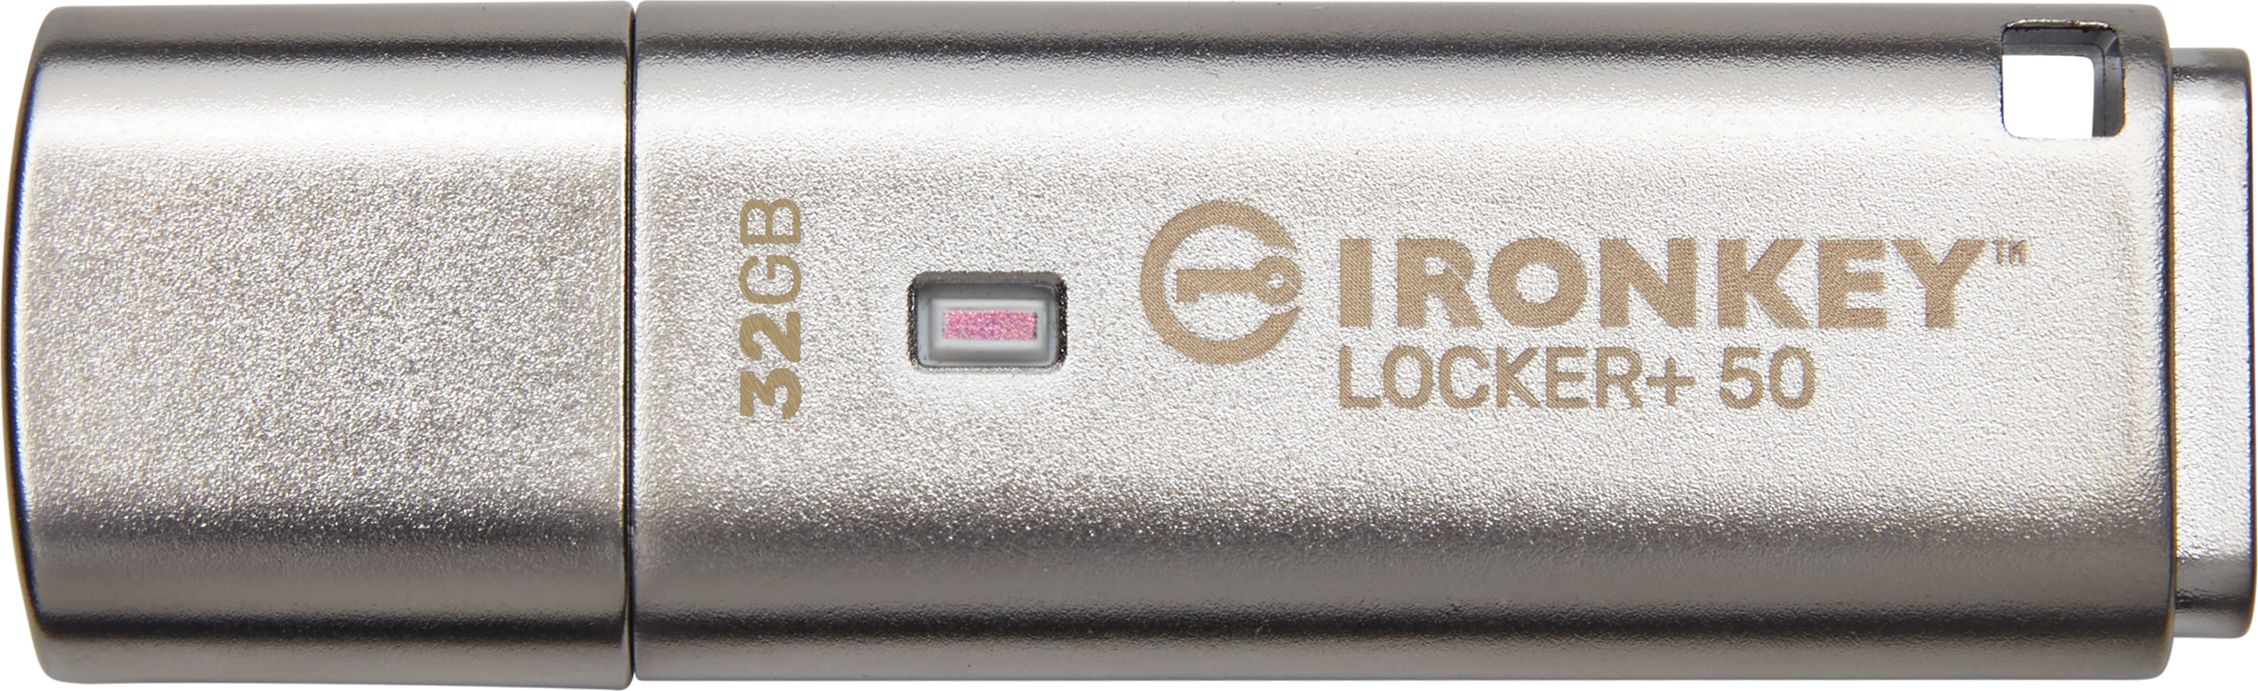 Kingston IronKey Locker+ 50, unitate flash de 32 GB (IKLP50/32 GB)